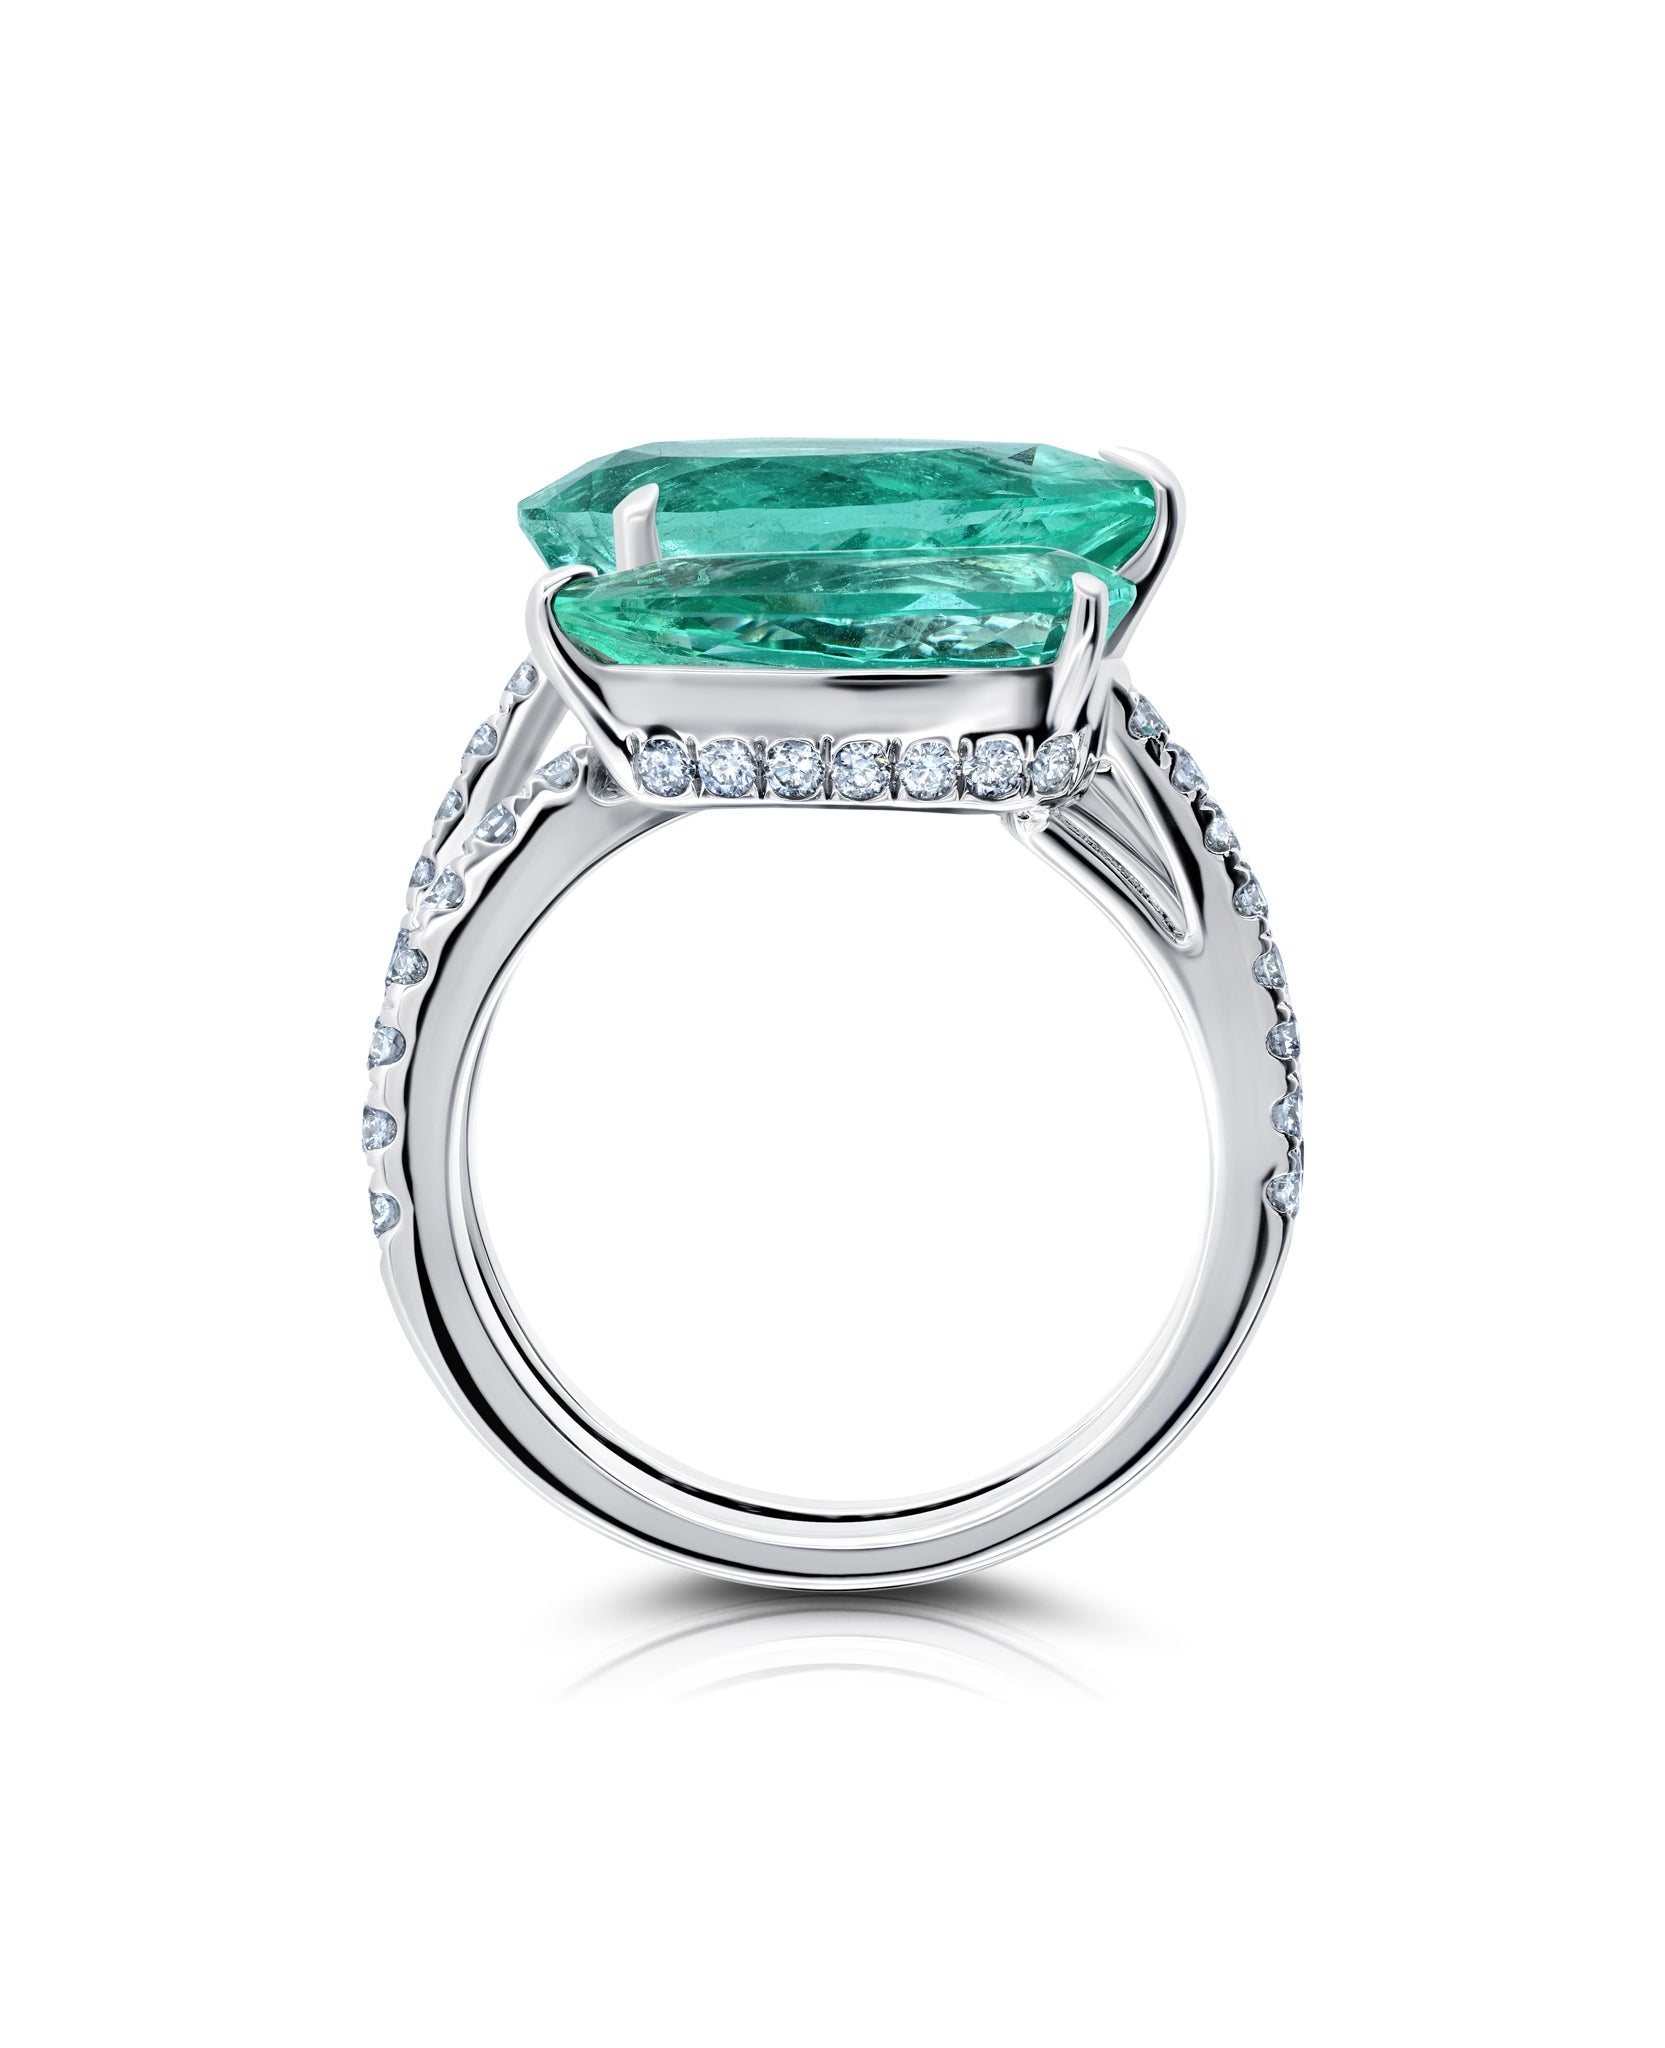 Emerald & Diamond Bypass Ring